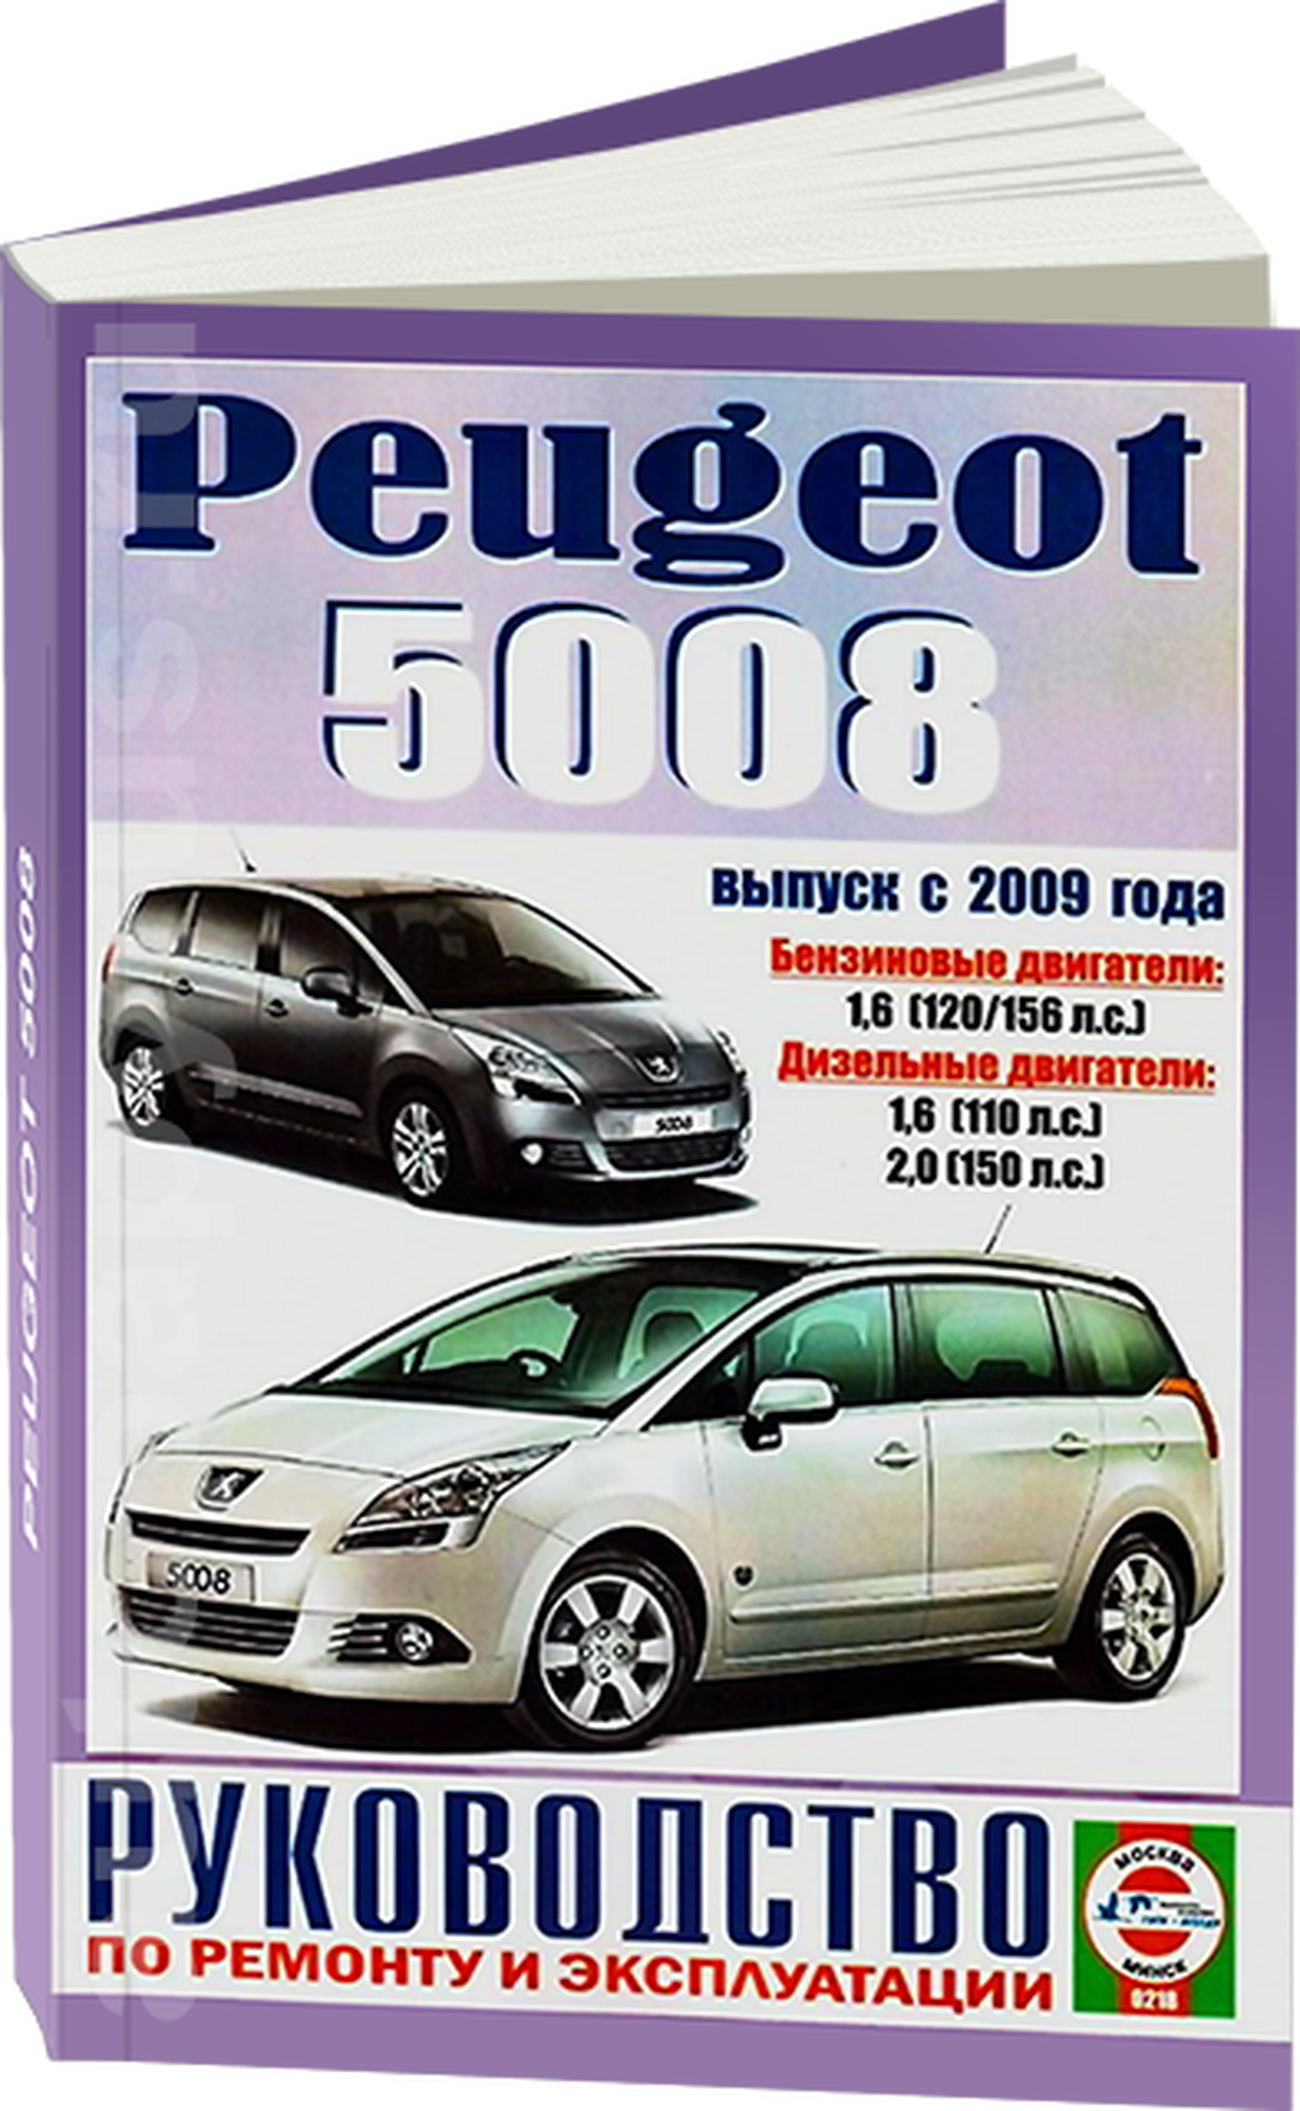 Книга: PEUGEOT 5008 (б , д) с 2009 г.в., рем., экспл., то | Чижовка